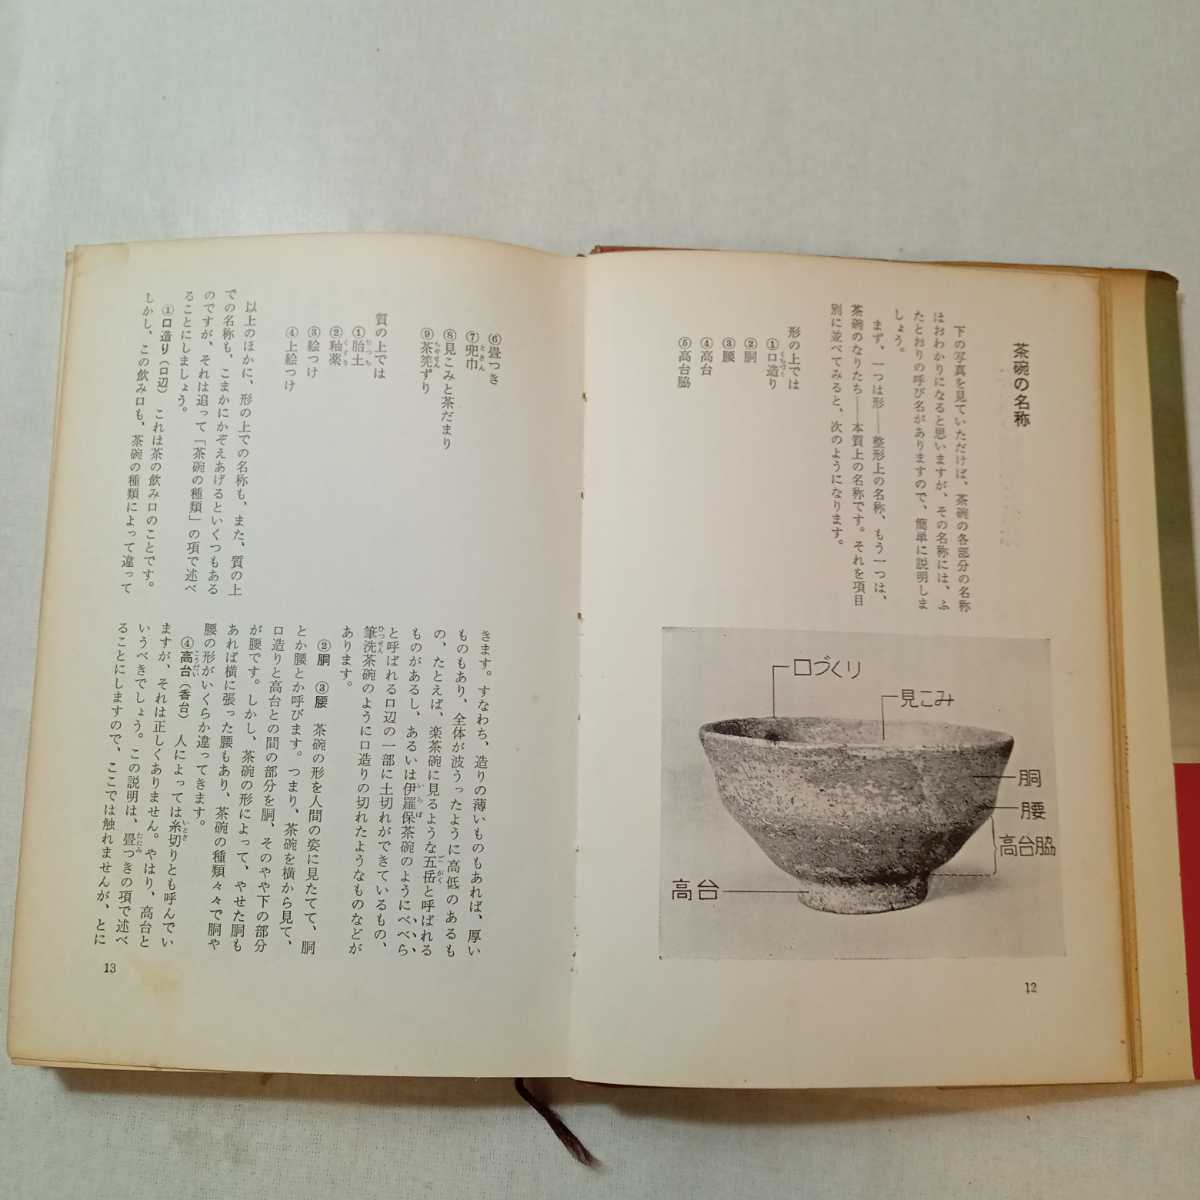 zaa-367♪茶碗の見方[やきものシリーズ1]　佐藤進三(著)　徳間書店　1968/2/25